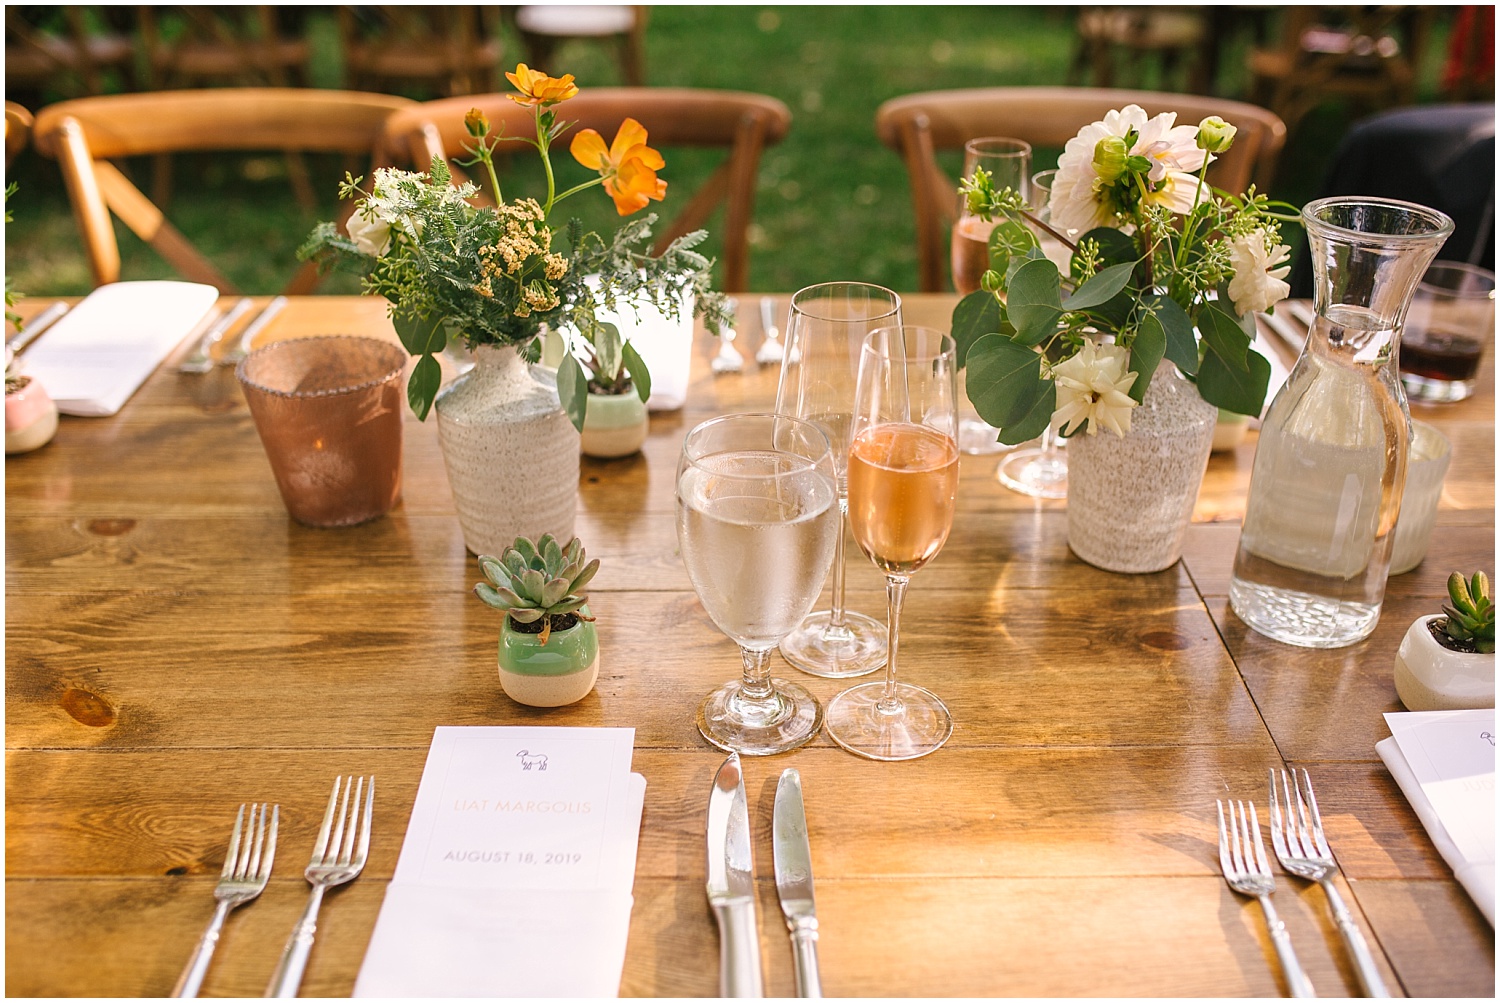 Garden party details at Lone Hawk Farm wedding reception